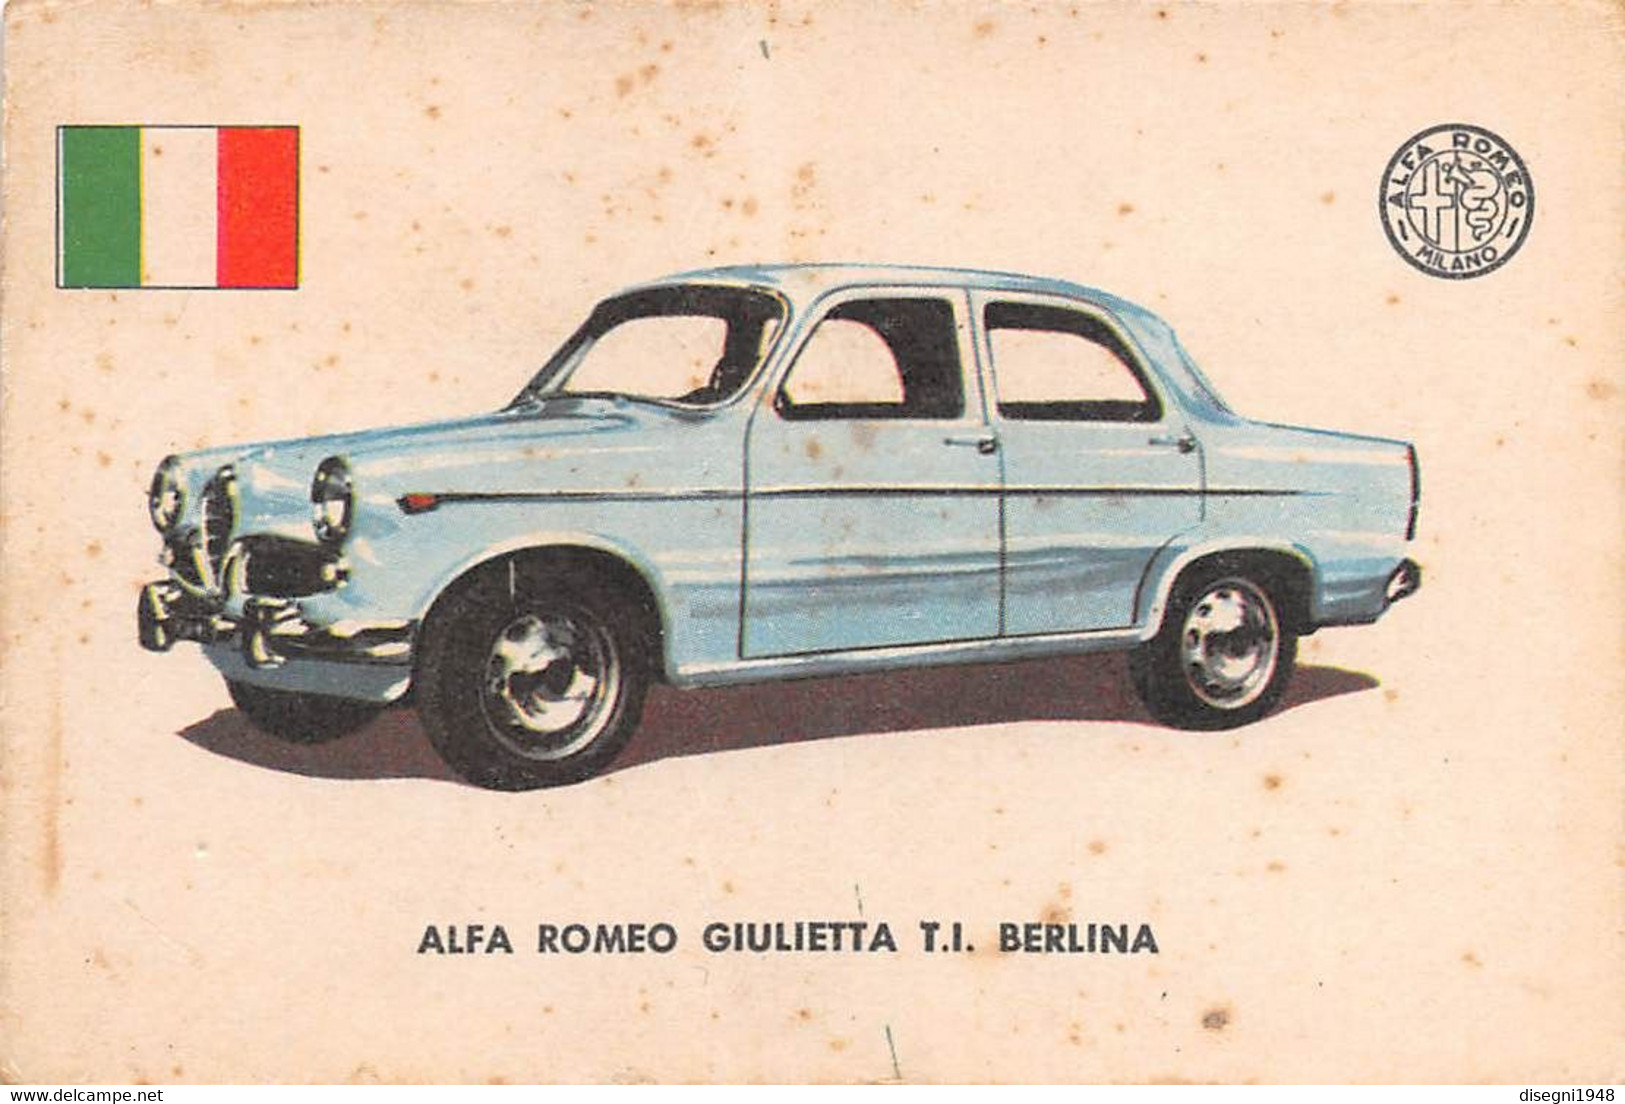 11916 "ALFA ROMEO GIULIETTA T.I. BERLINA 2 - AUTO INTERNATIONAL PARADE - SIDAM TORINO - 1961" FIGURINA CARTONATA ORIG. - Engine